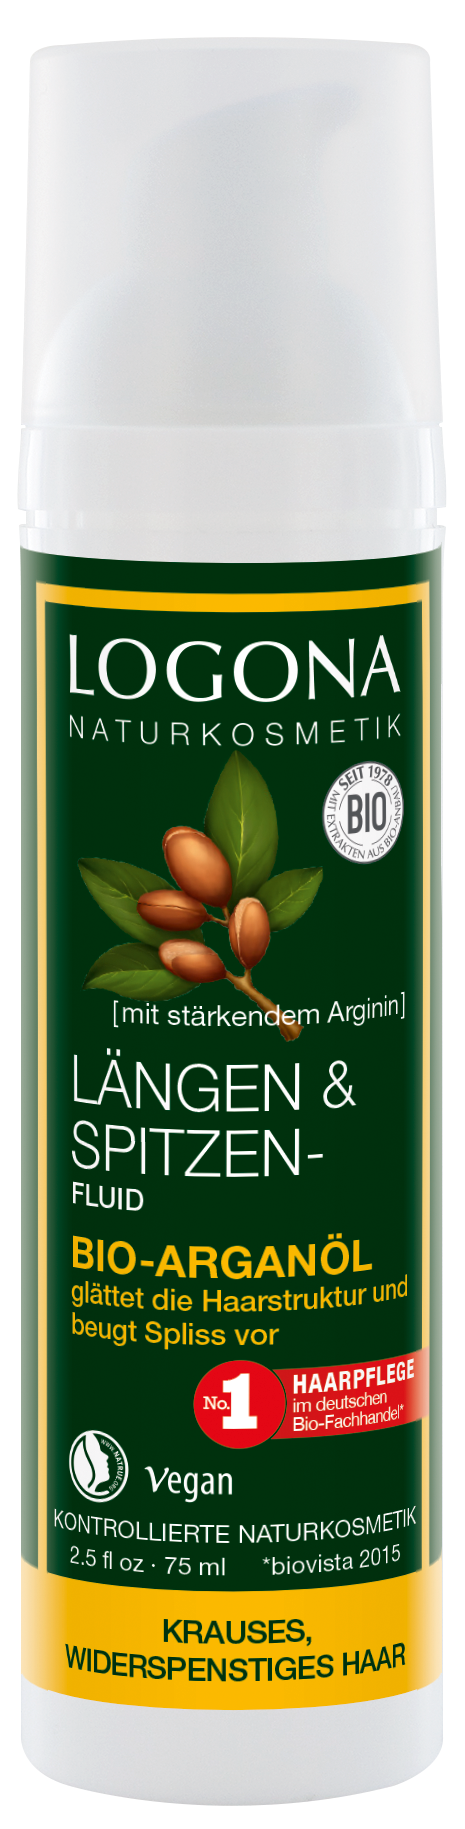 Längen- und Spitzenfluid Bio-Arganöl | LOGONA Naturkosmetik